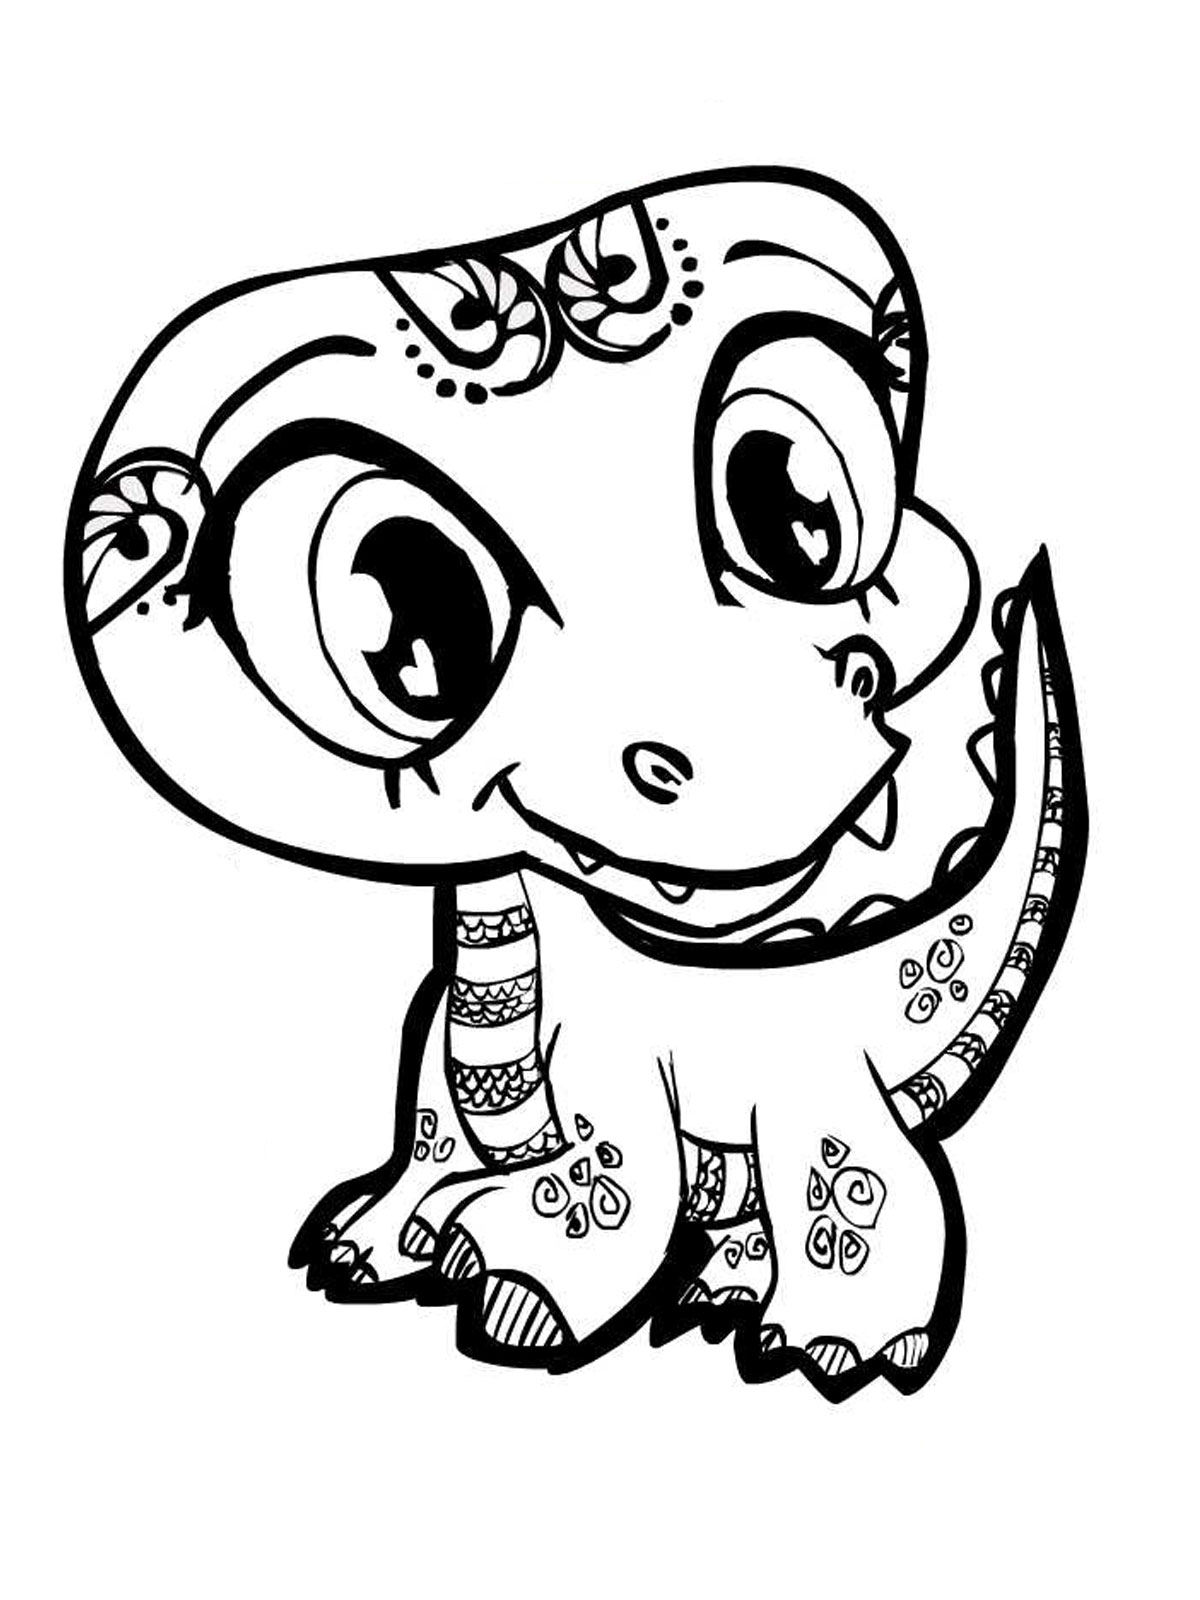 Cute Dinosaur With Big Eyes Coloring Page   Free Printable ...